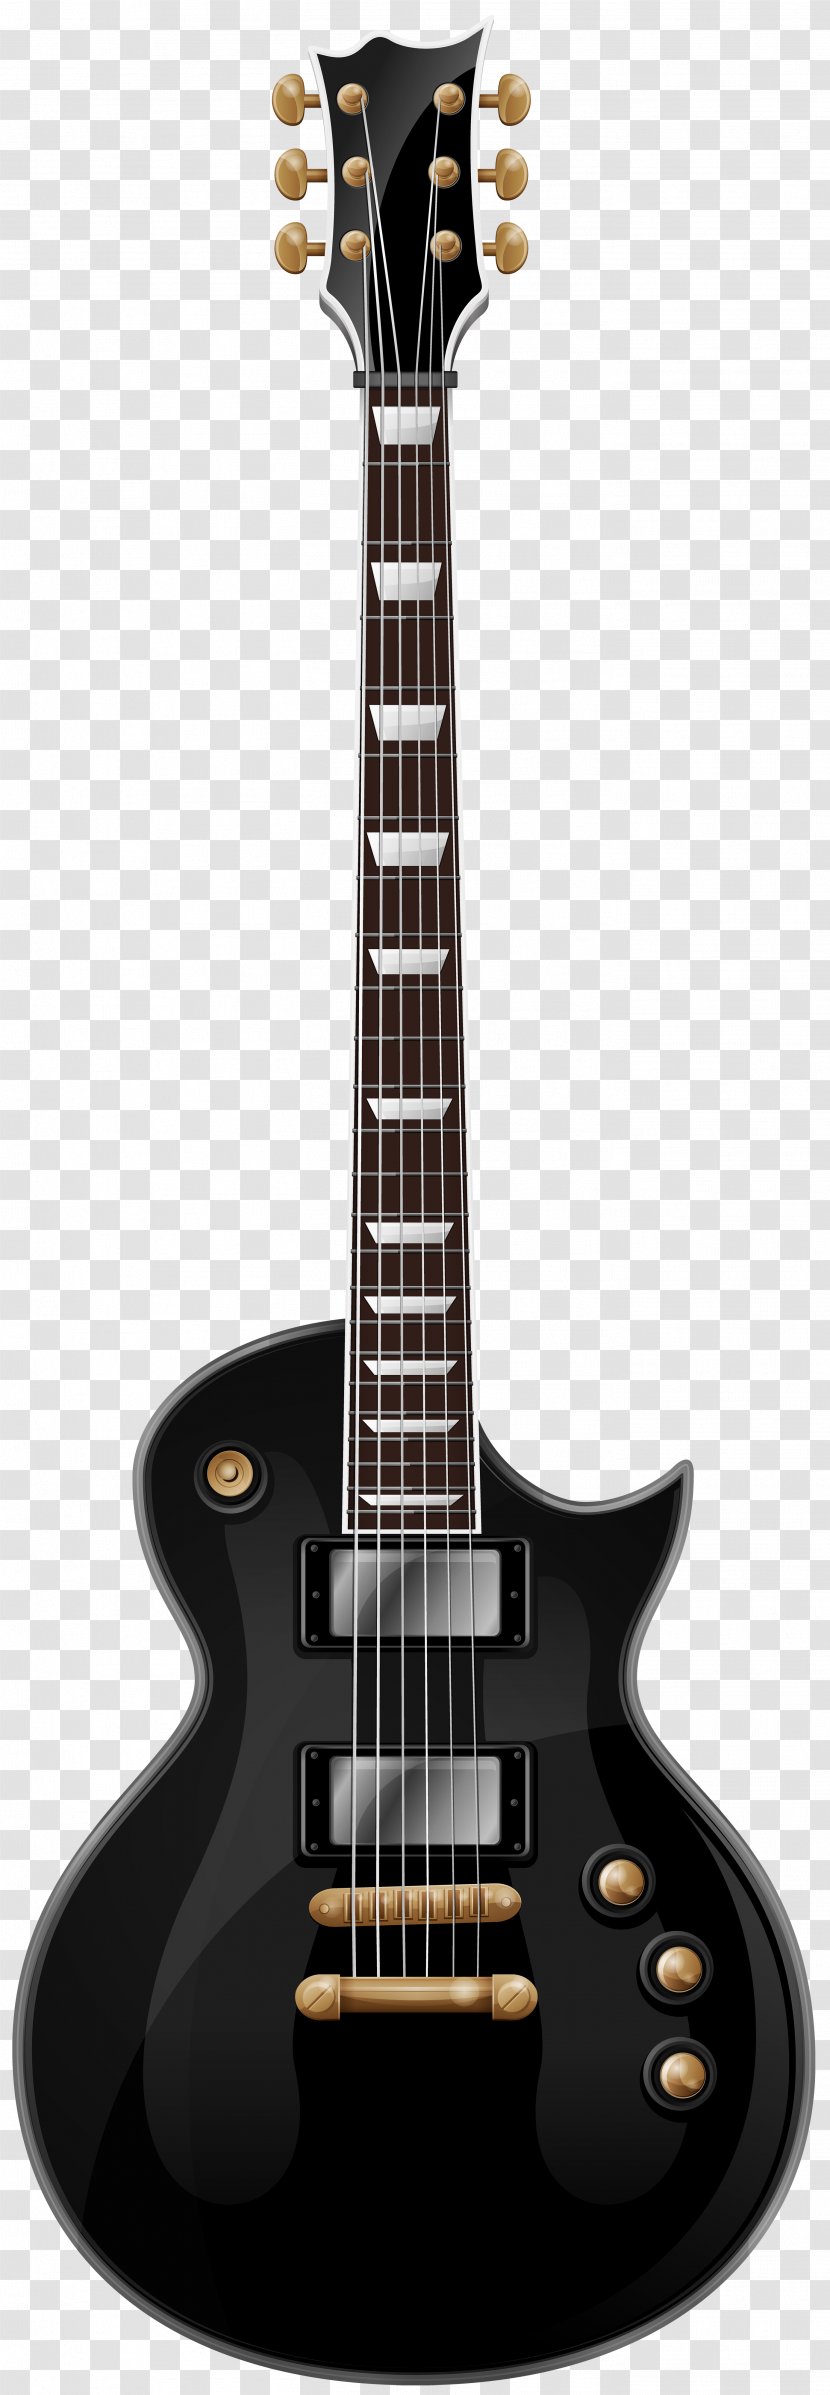 ESP LTD EC-1000 EMG 81 MH-1000 Electric Guitar - Silhouette - Black Clip Art Image Transparent PNG